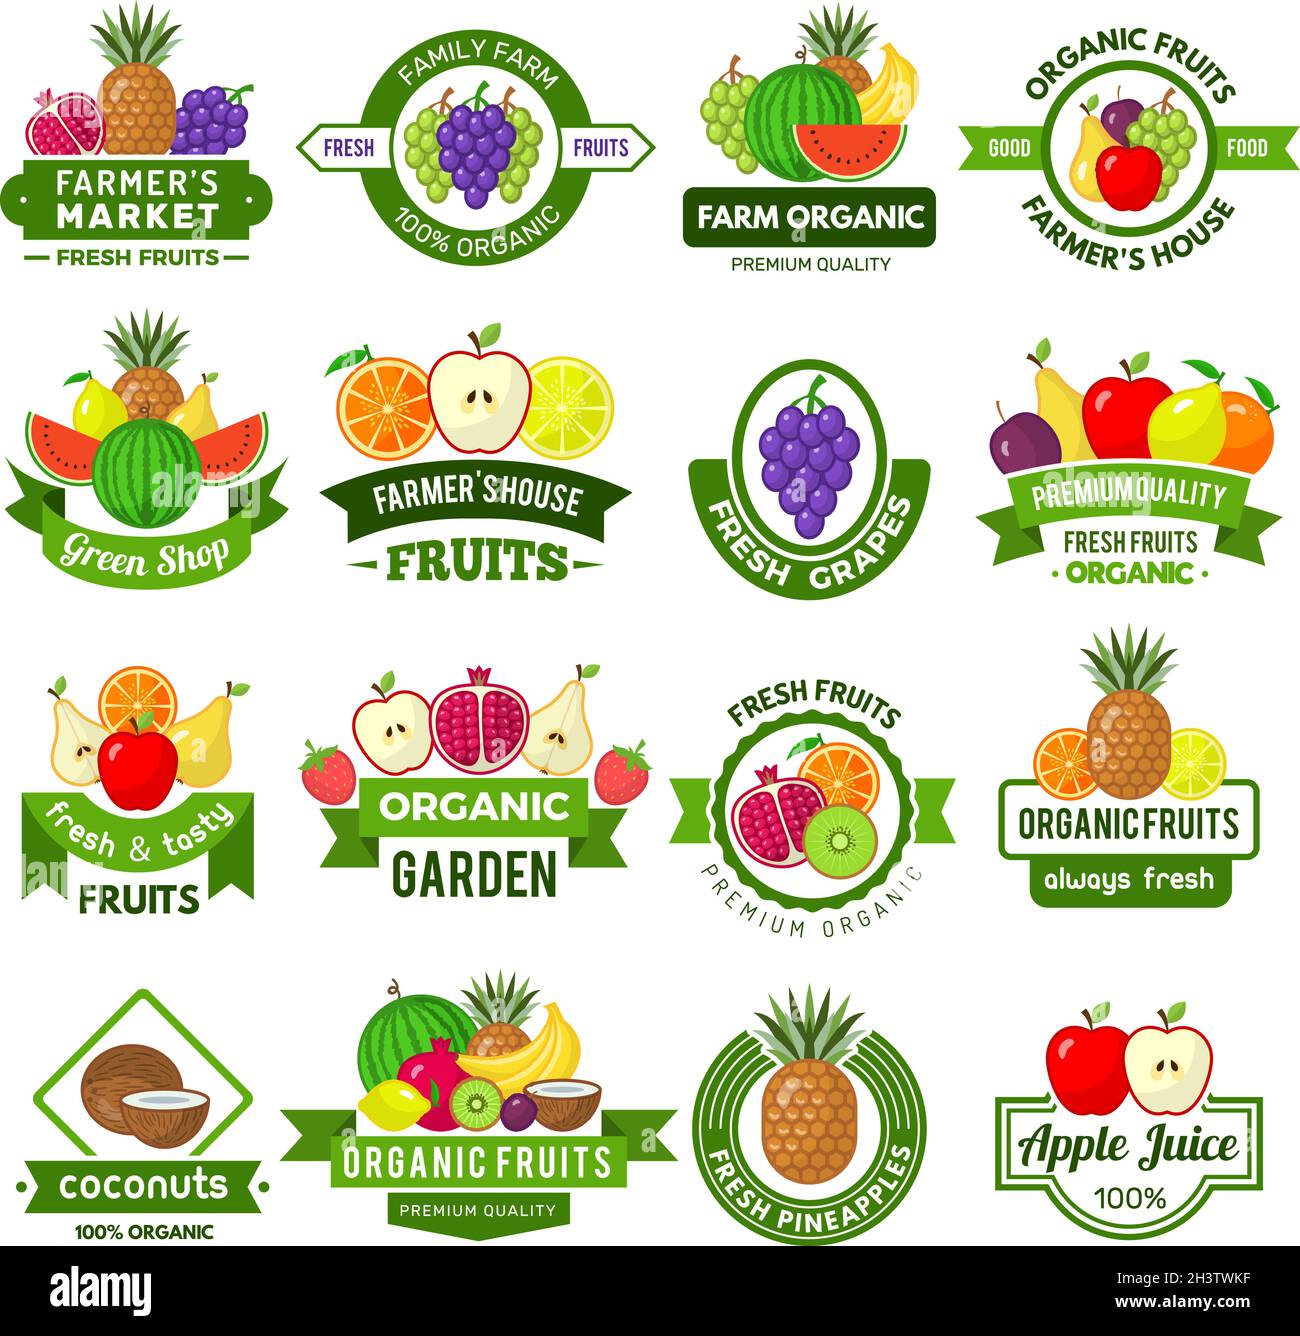 Fruits logos. Decoration badges with healthy fruits fresh farm eco ...